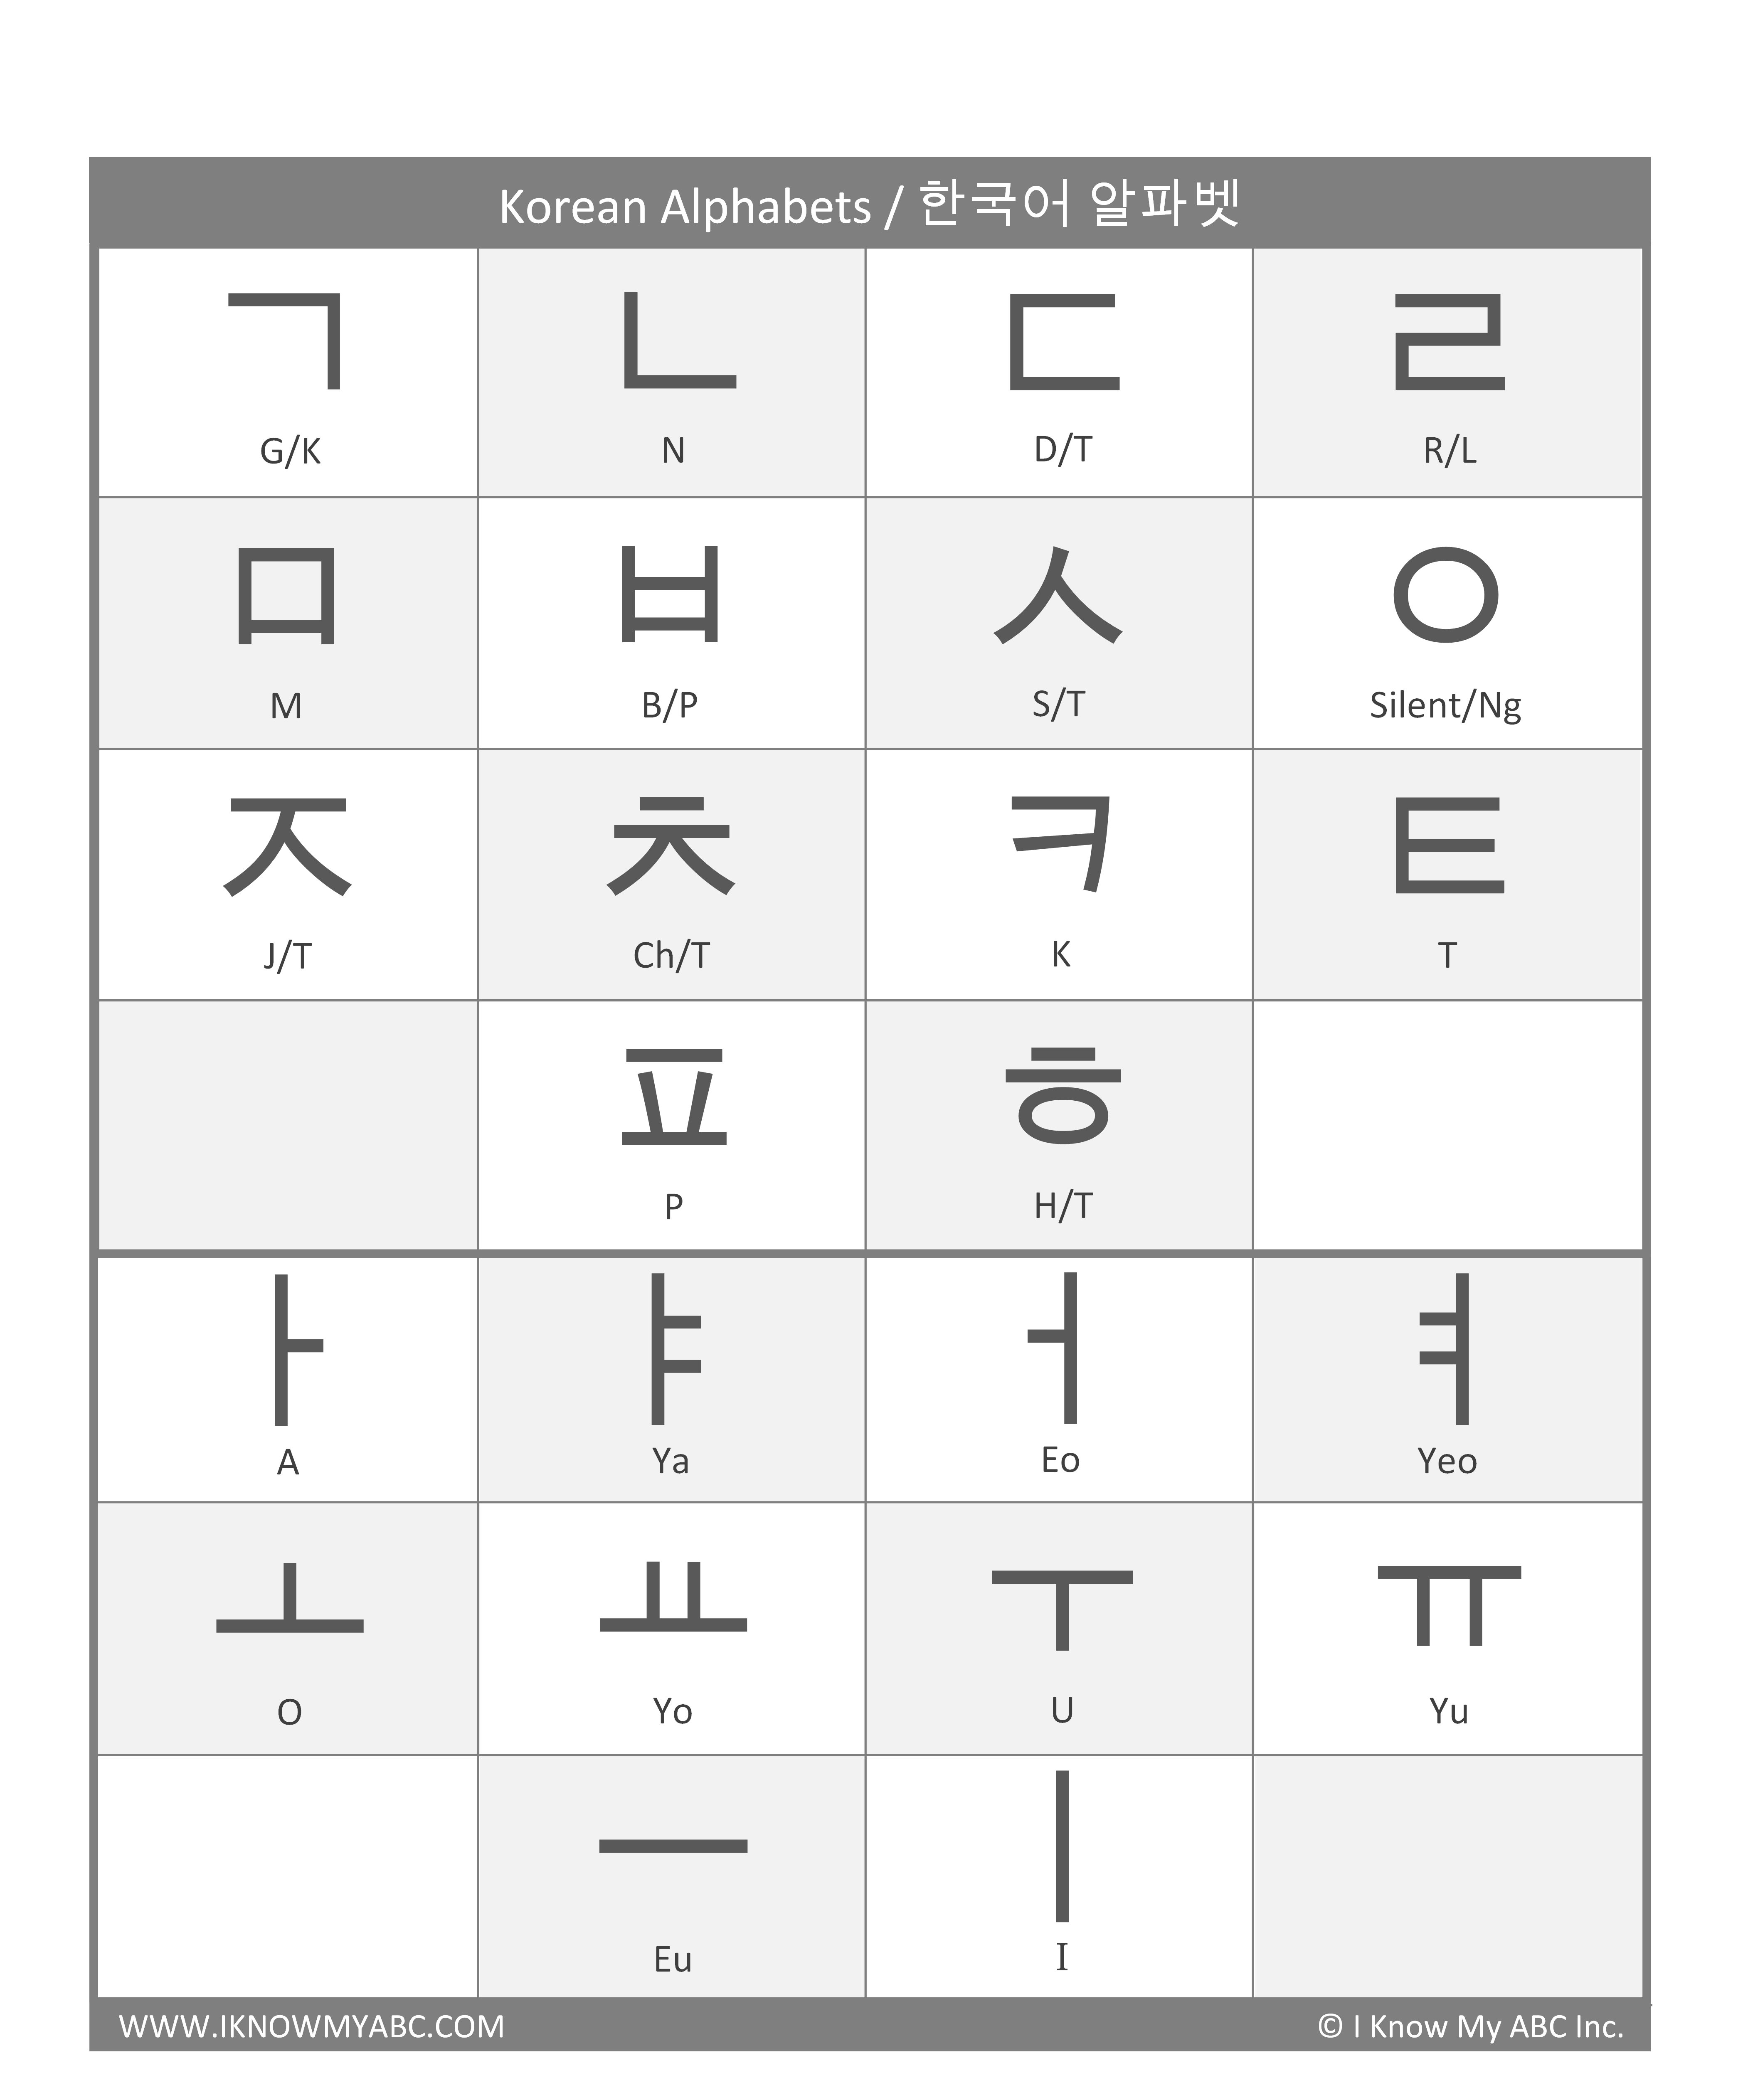 learn-korean-alphabet-free-educational-resources-i-know-my-abc-inc